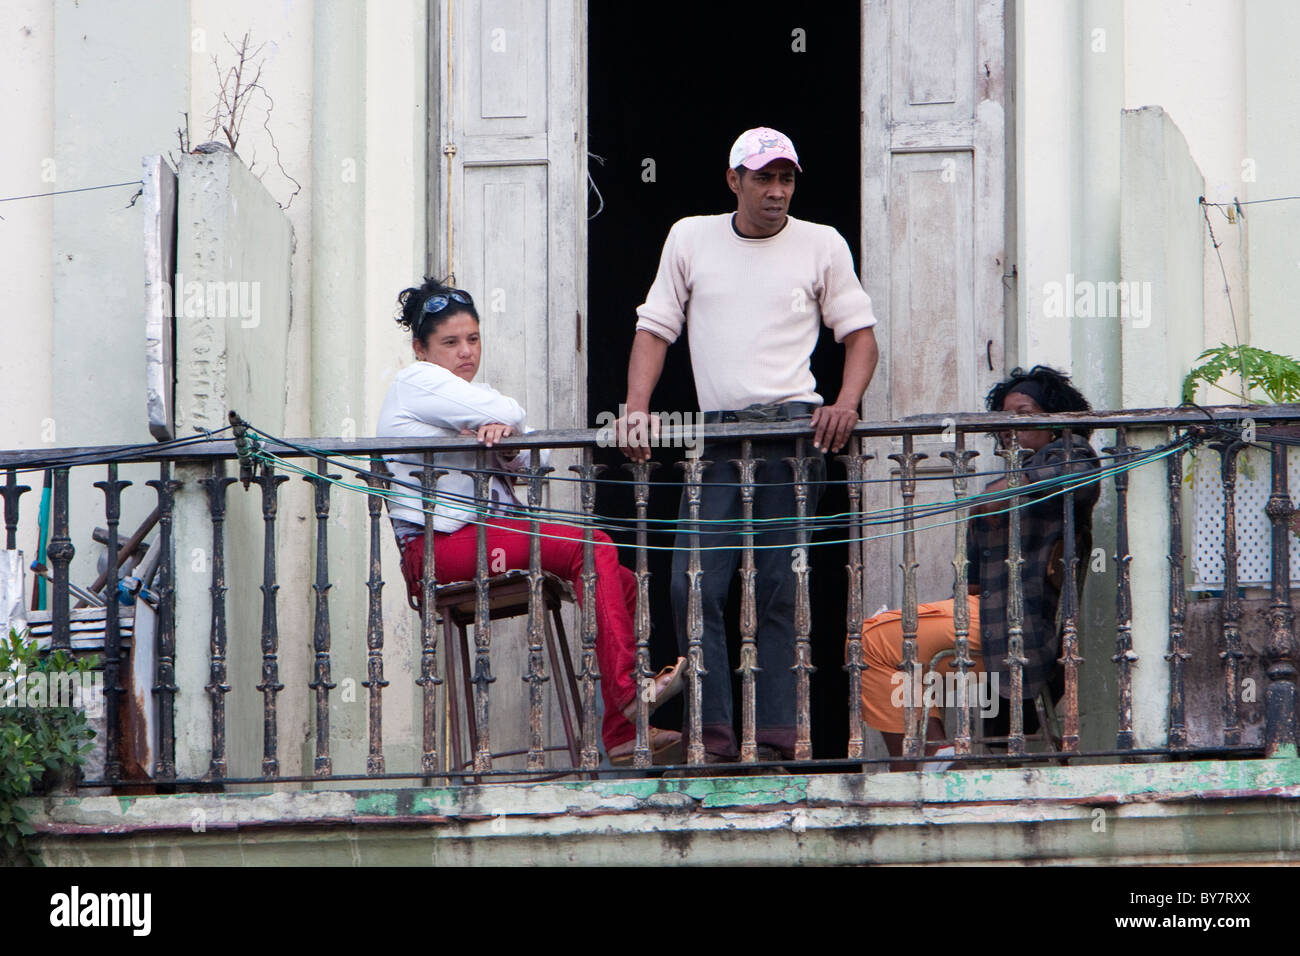 Cuba, Havana. Cubans Observing Life in the Street below their Balcony. Stock Photo